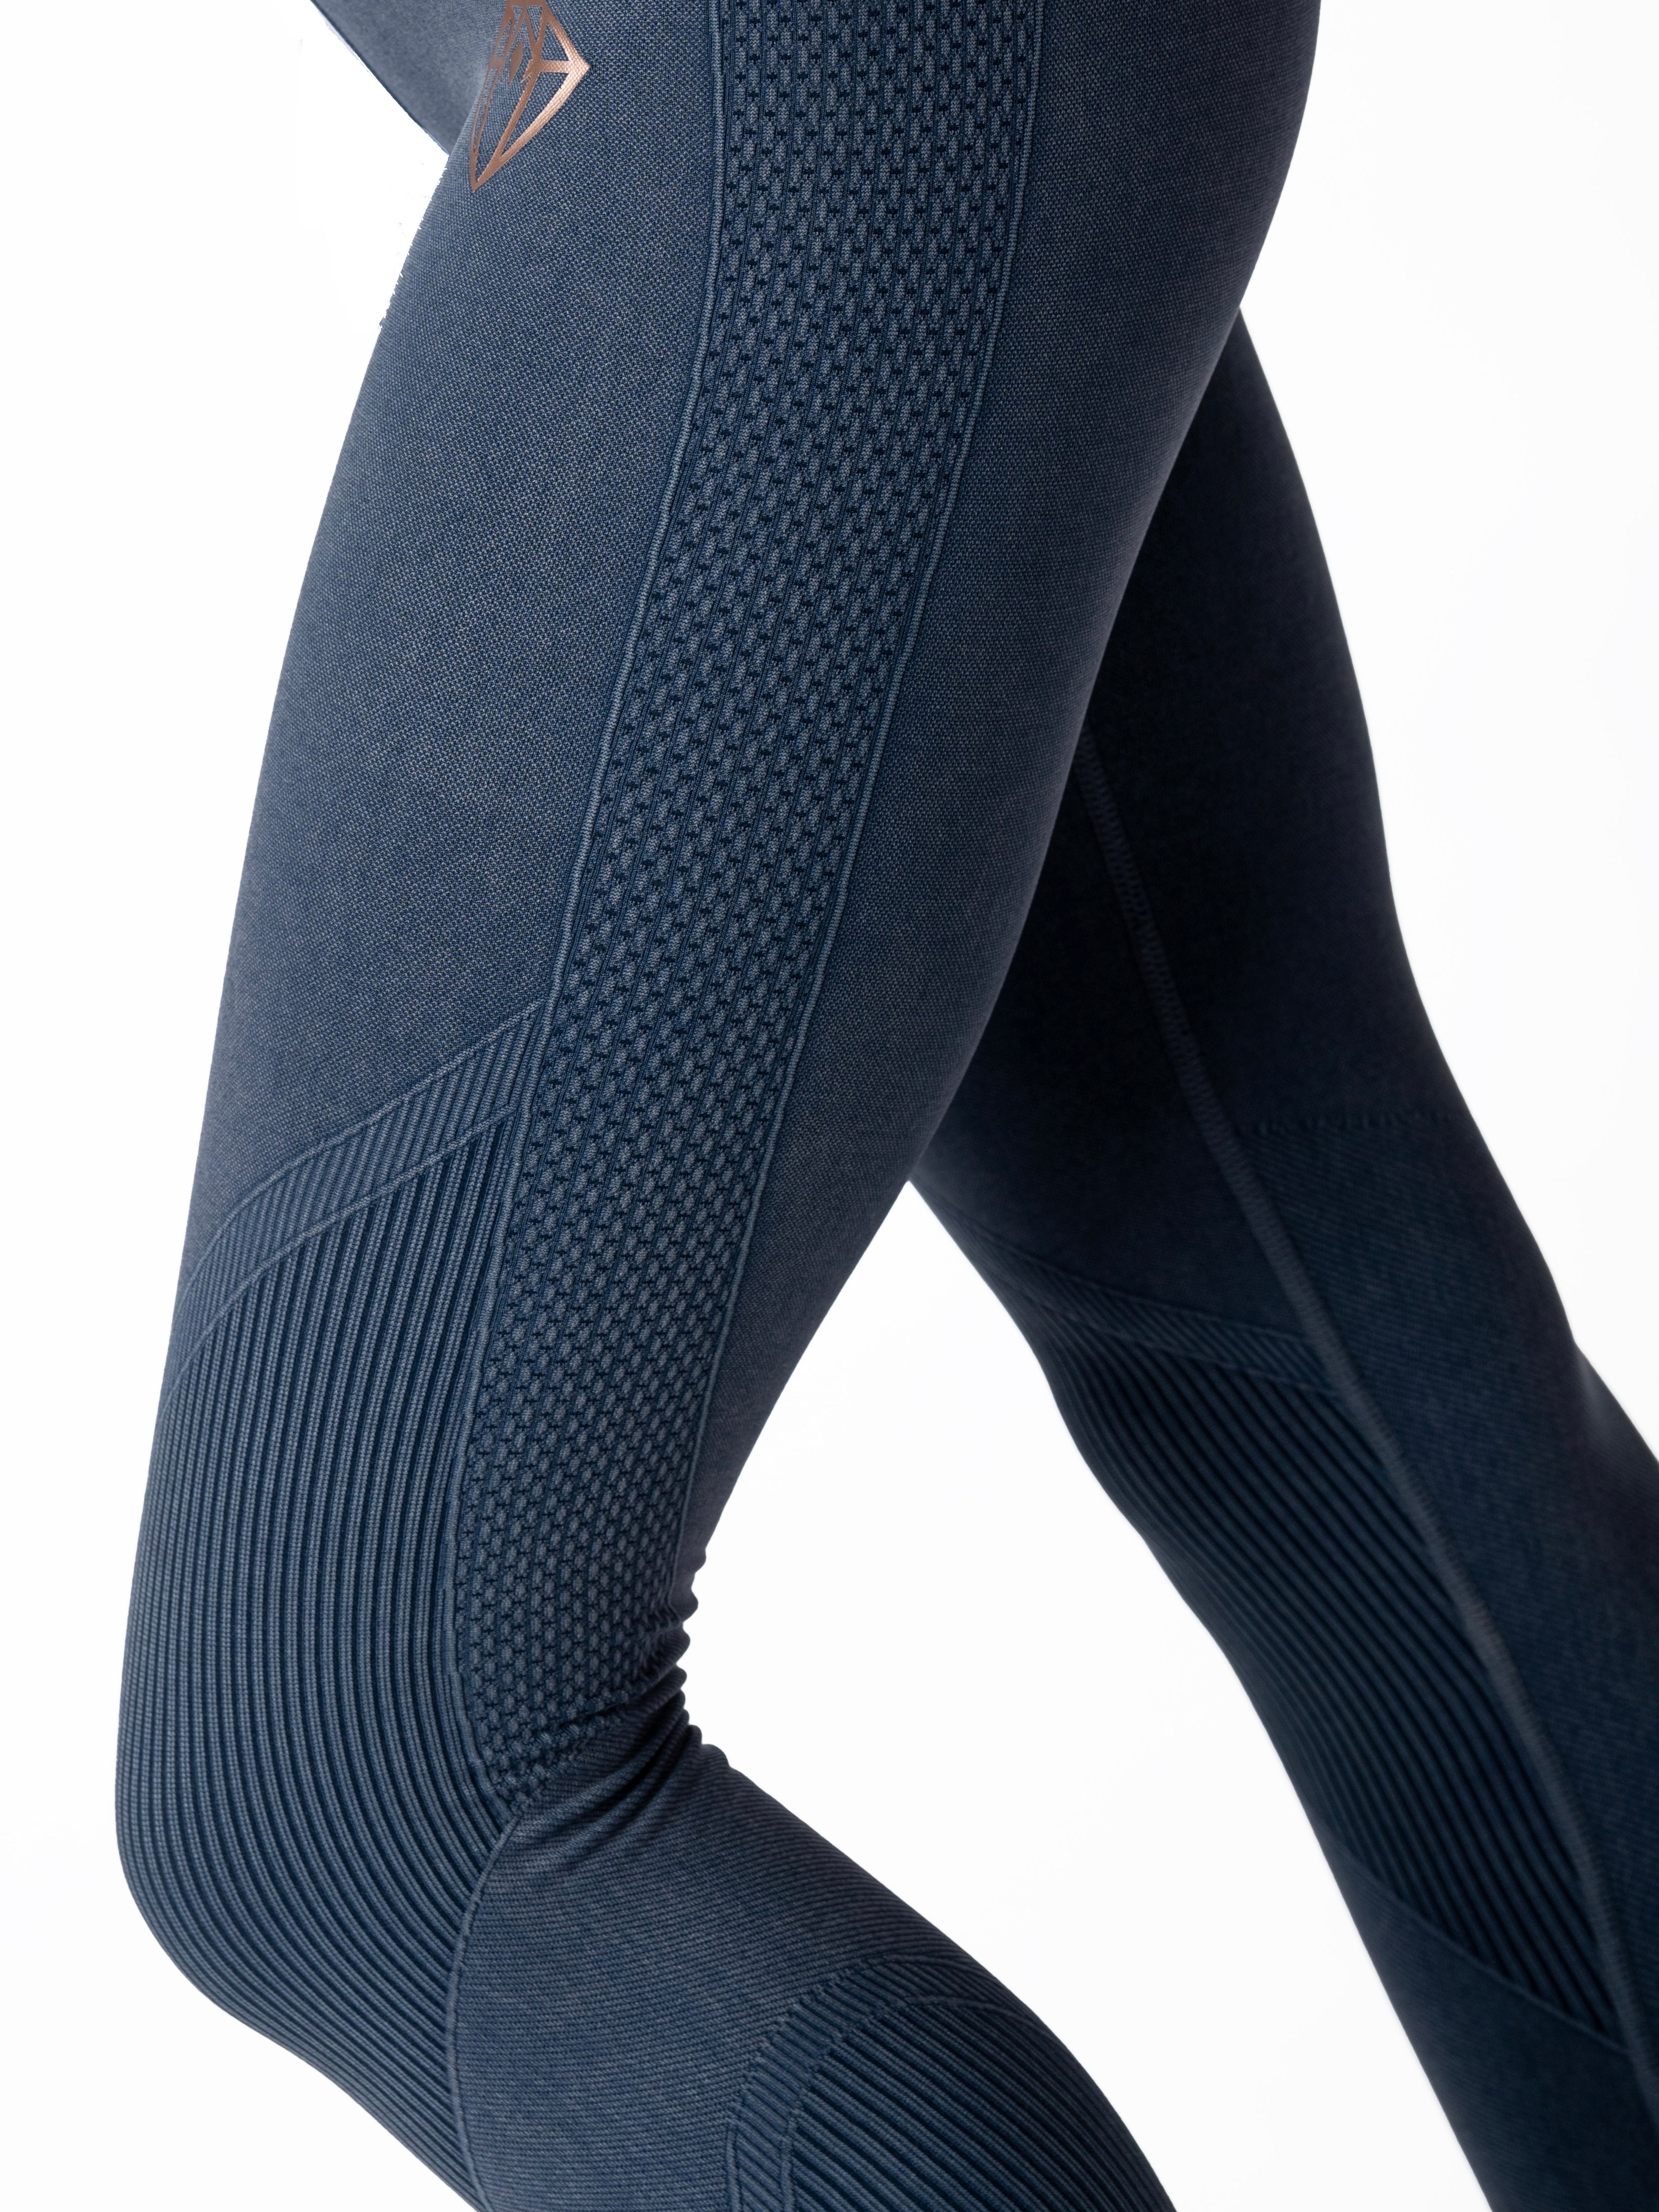 Blue Denim Look Legging | PrettyLittleThing